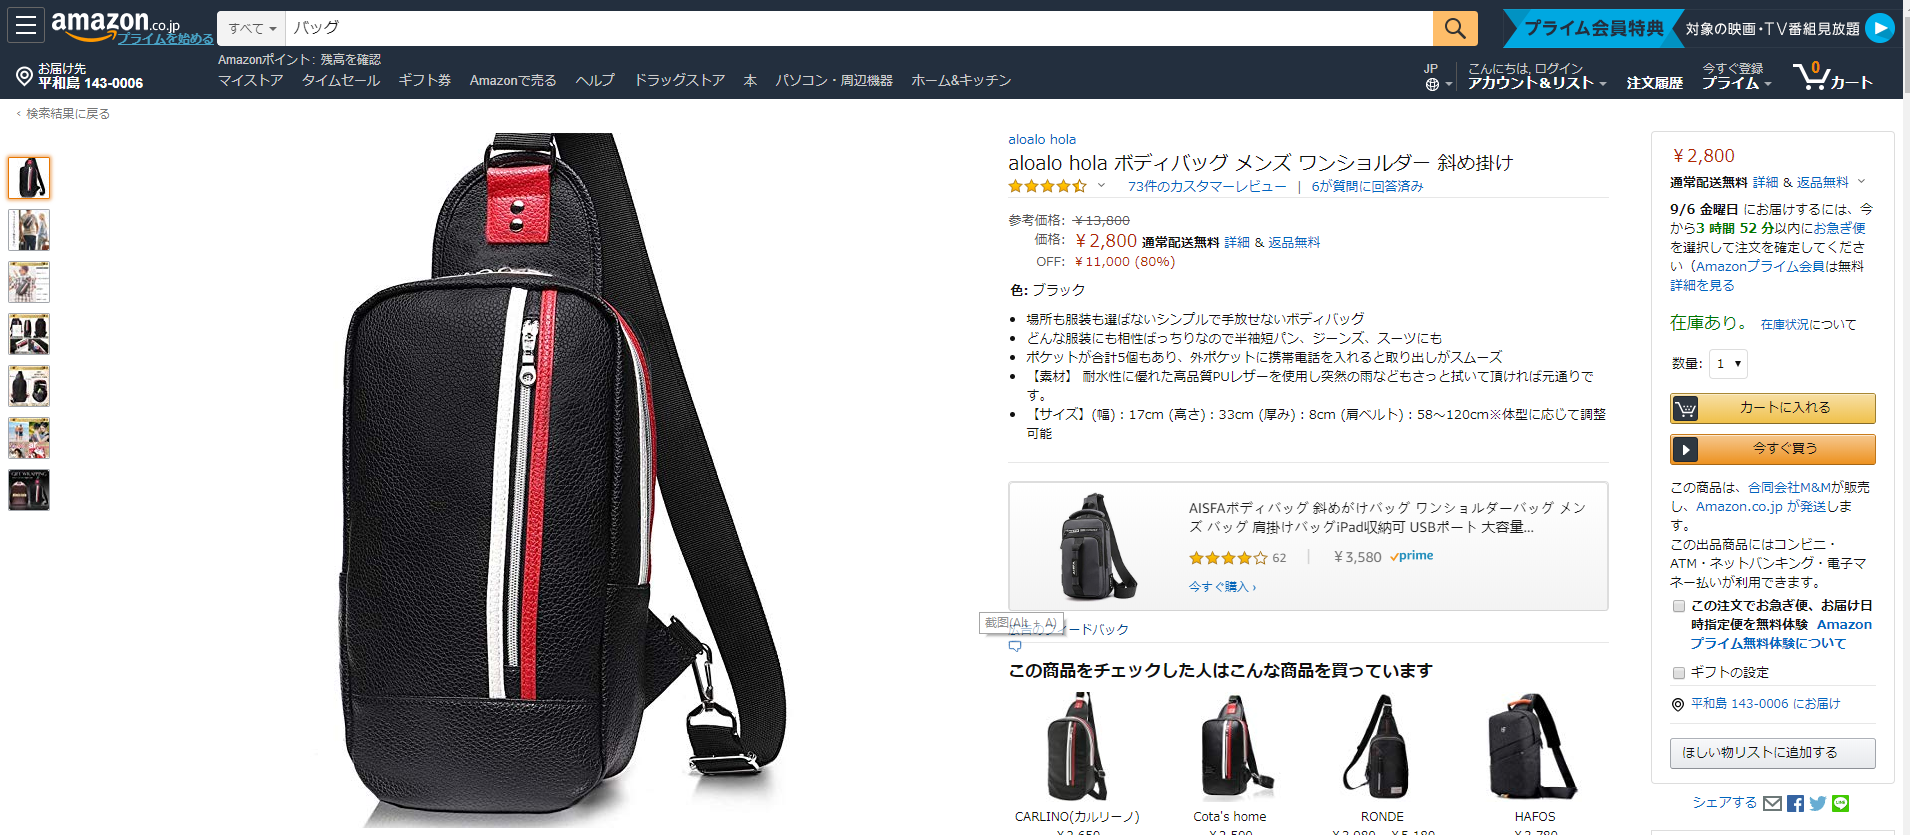 01-Amazon.jp商品情報.png